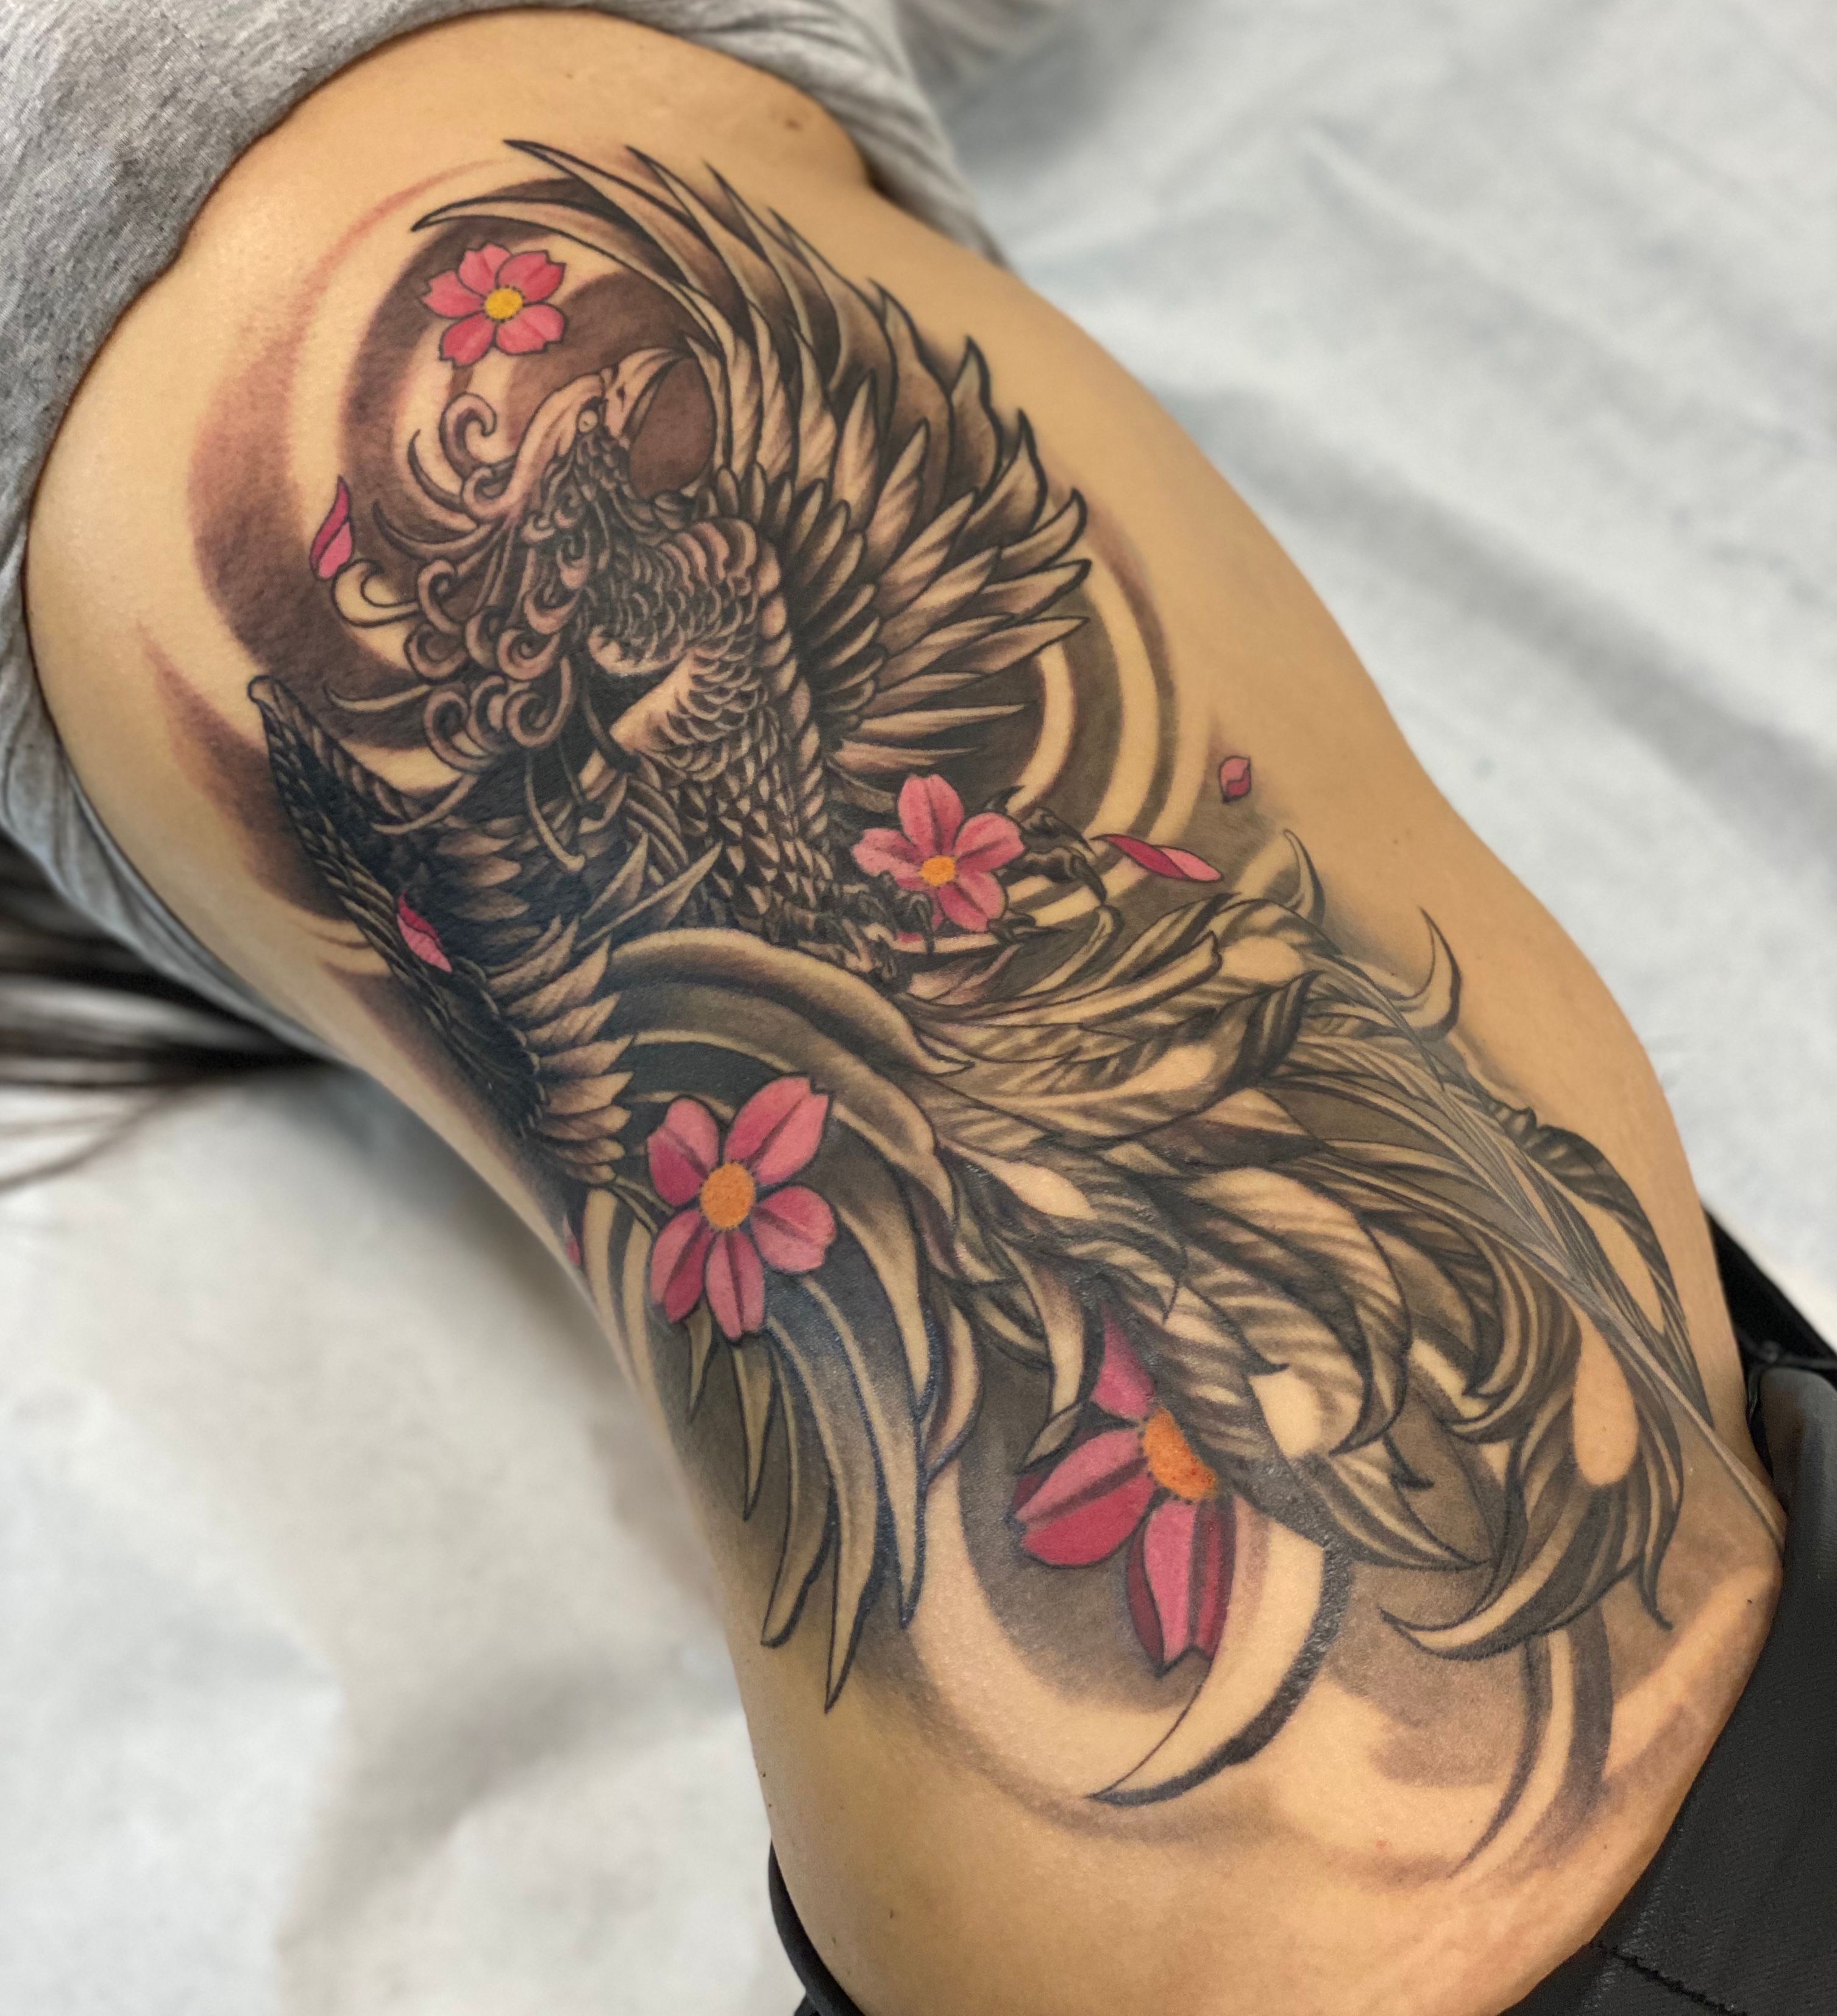 Temporary Tattoos For Men And Women, Big Arm Sleeve Time Tattoo Peony  Flower Temporary Tattoo Fire Phoenix Fake Tattoo Sticker Wings From  Konig_albert, $14.98 | DHgate.Com